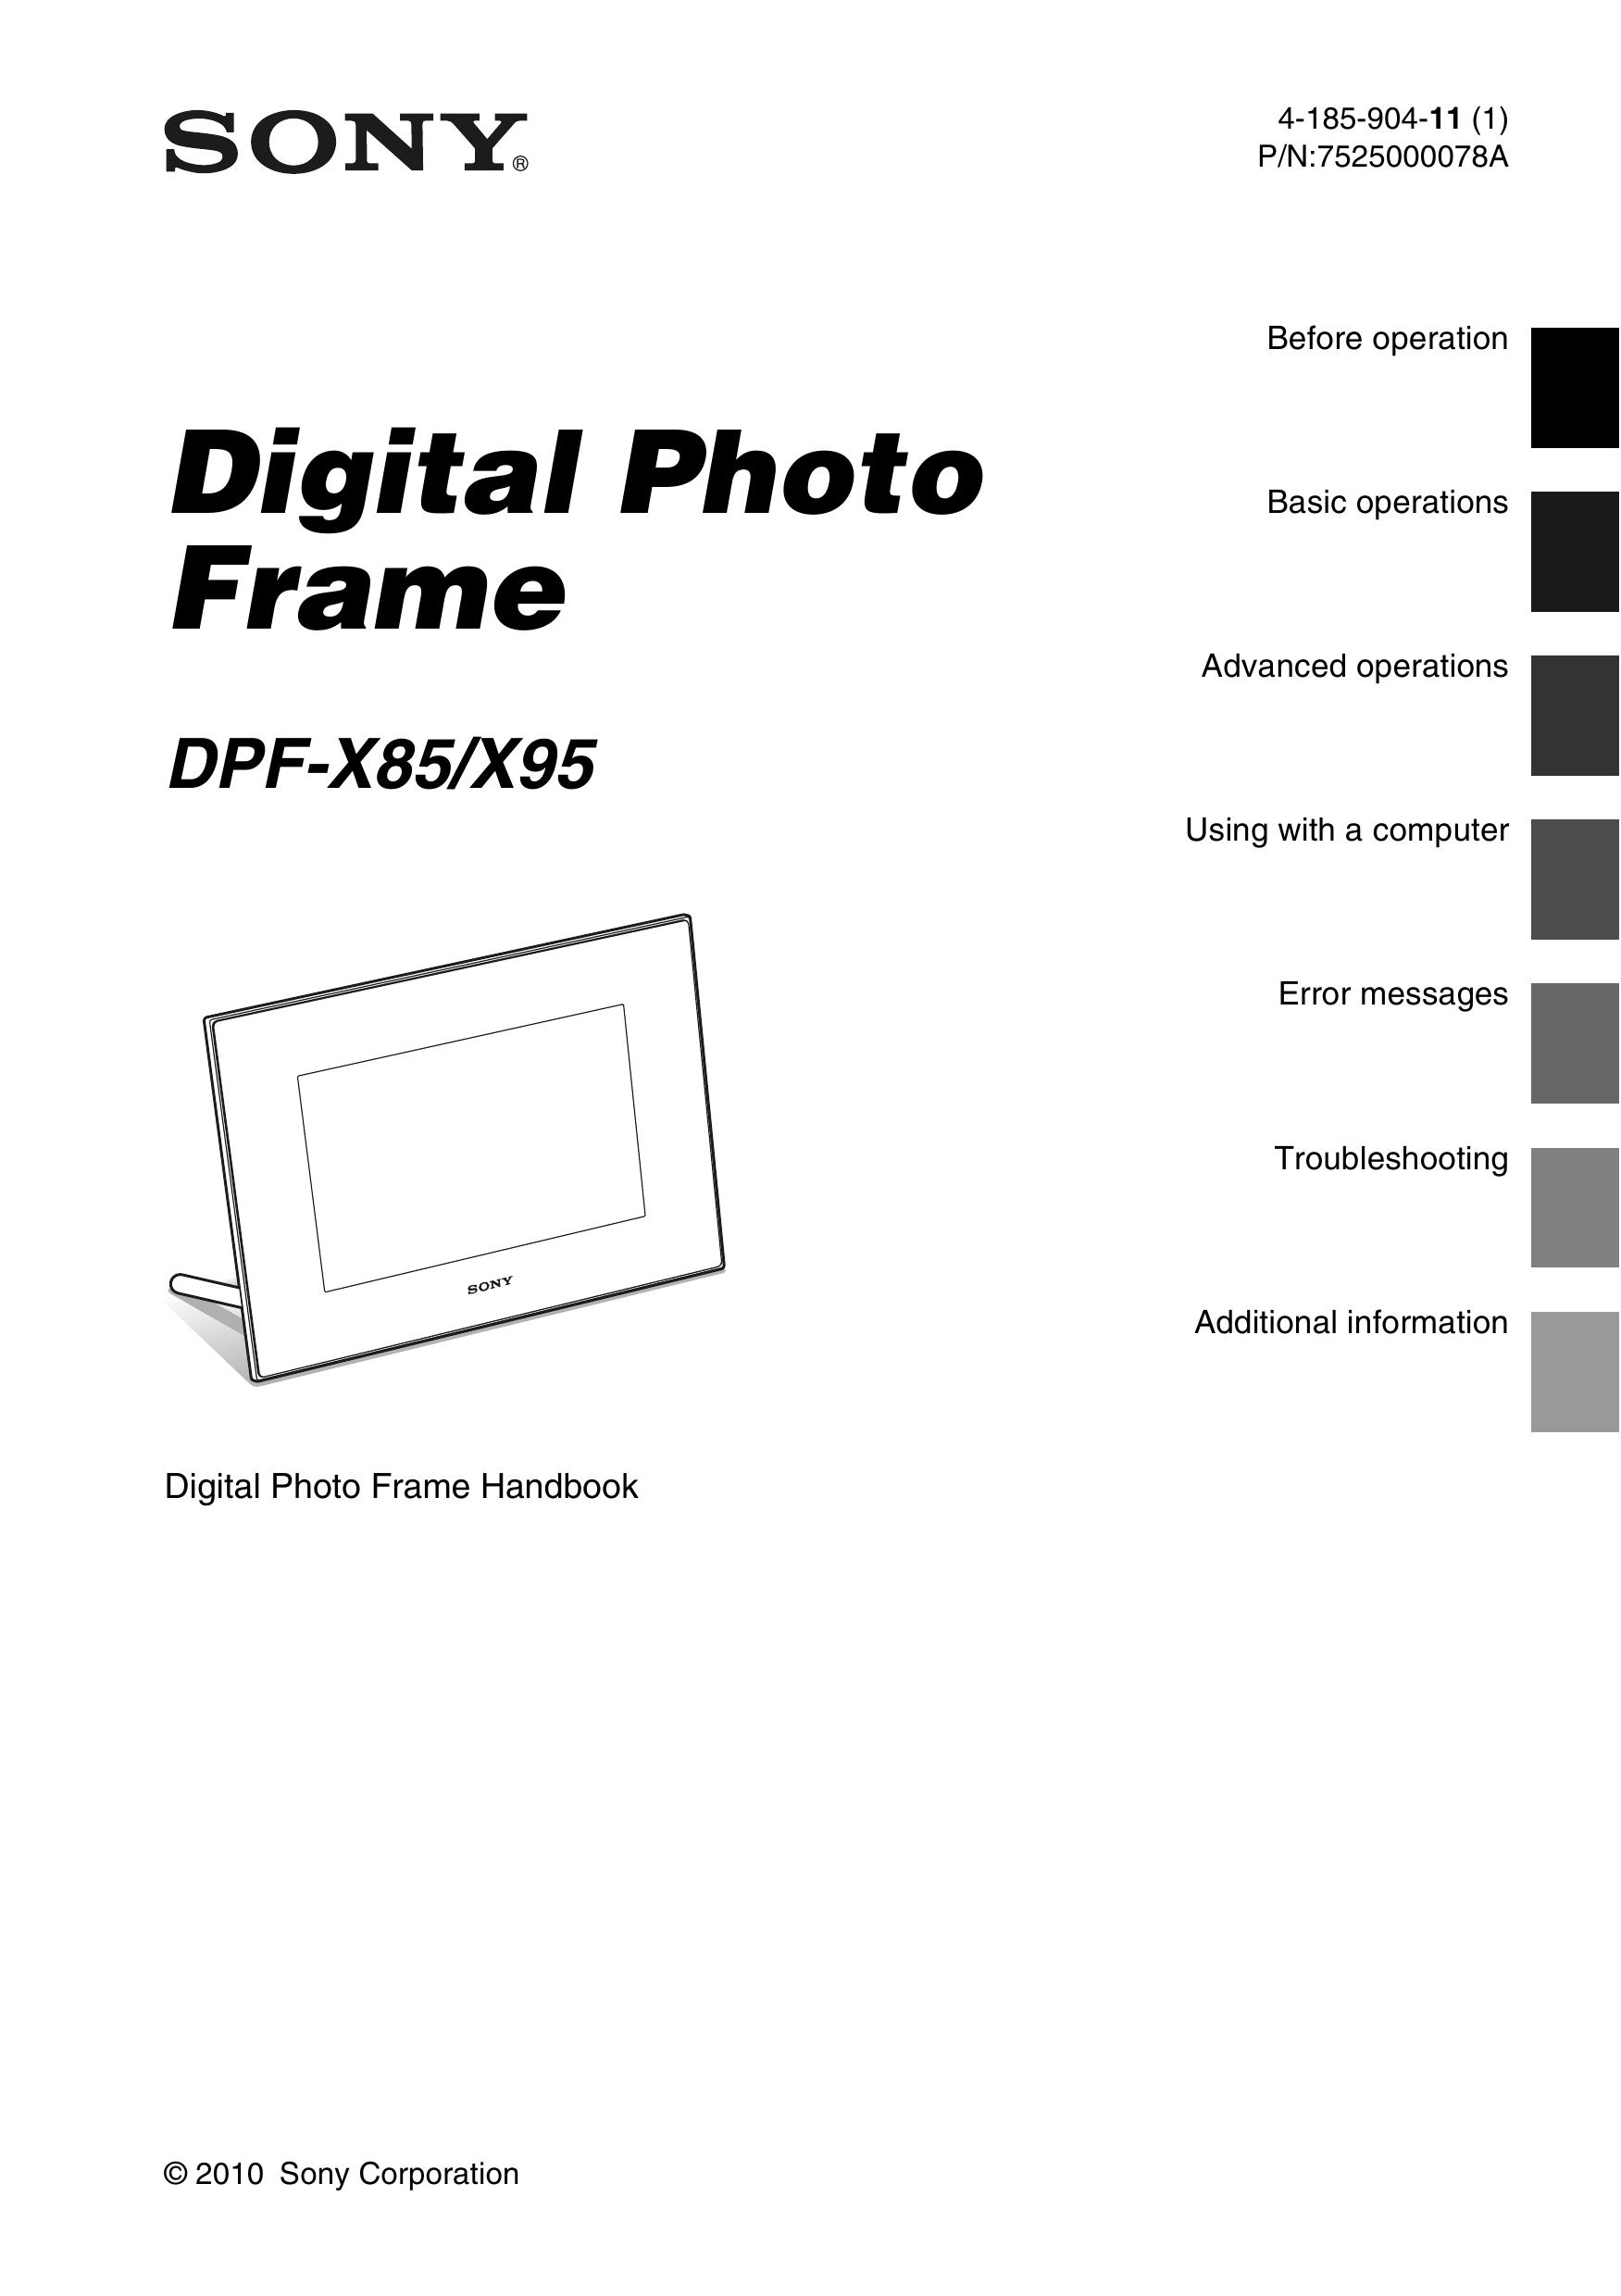 Sony DPF-X95 Digital Photo Frame User Manual